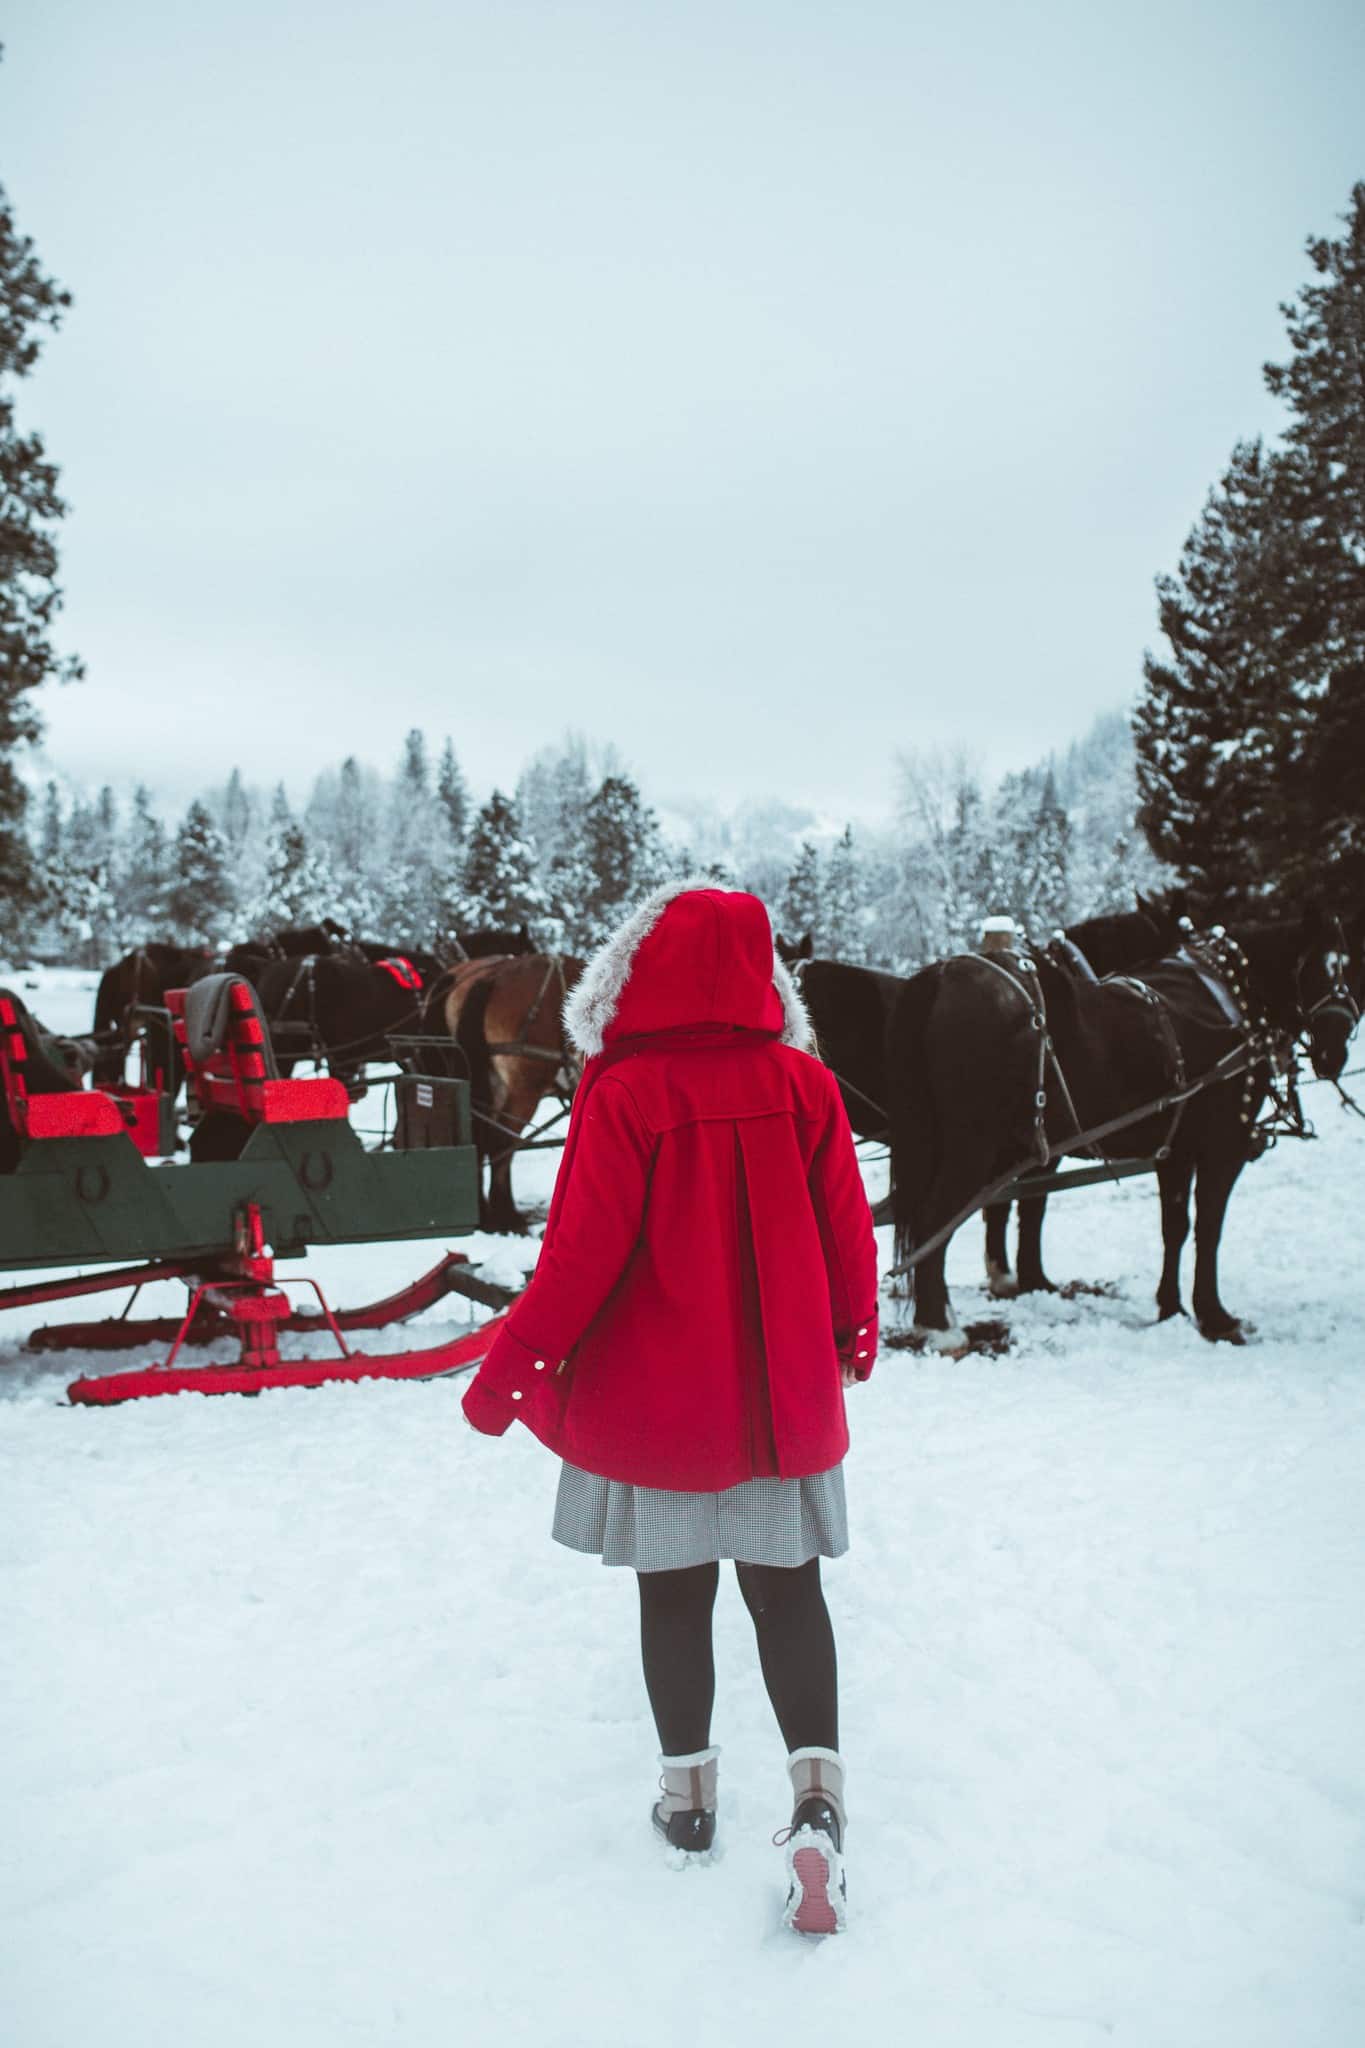 Woman in red coat walking towards sleigh